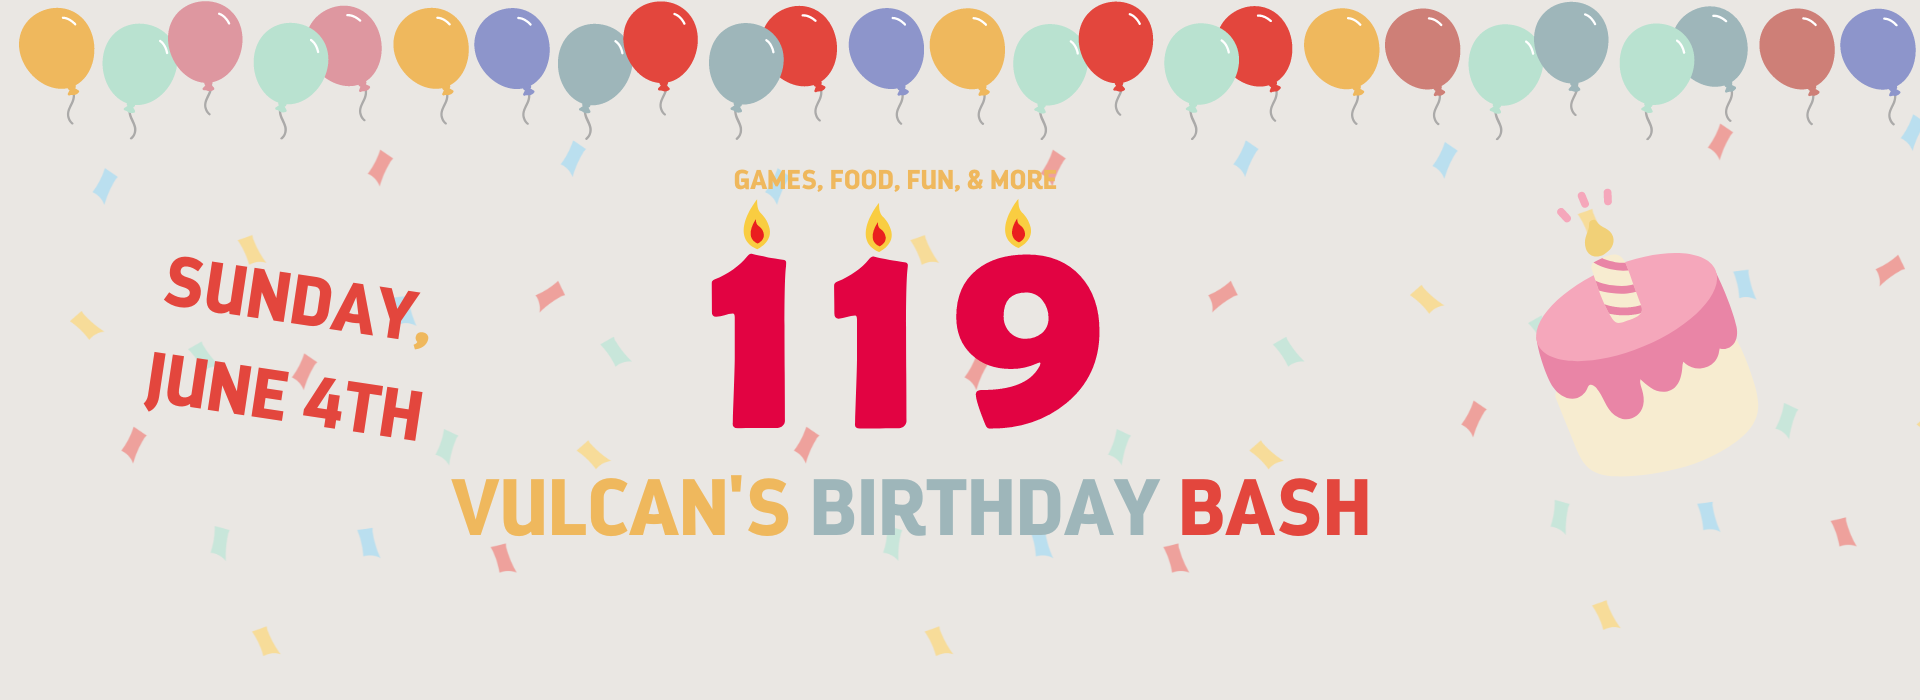 Vulcan's 119th Birthday Bash